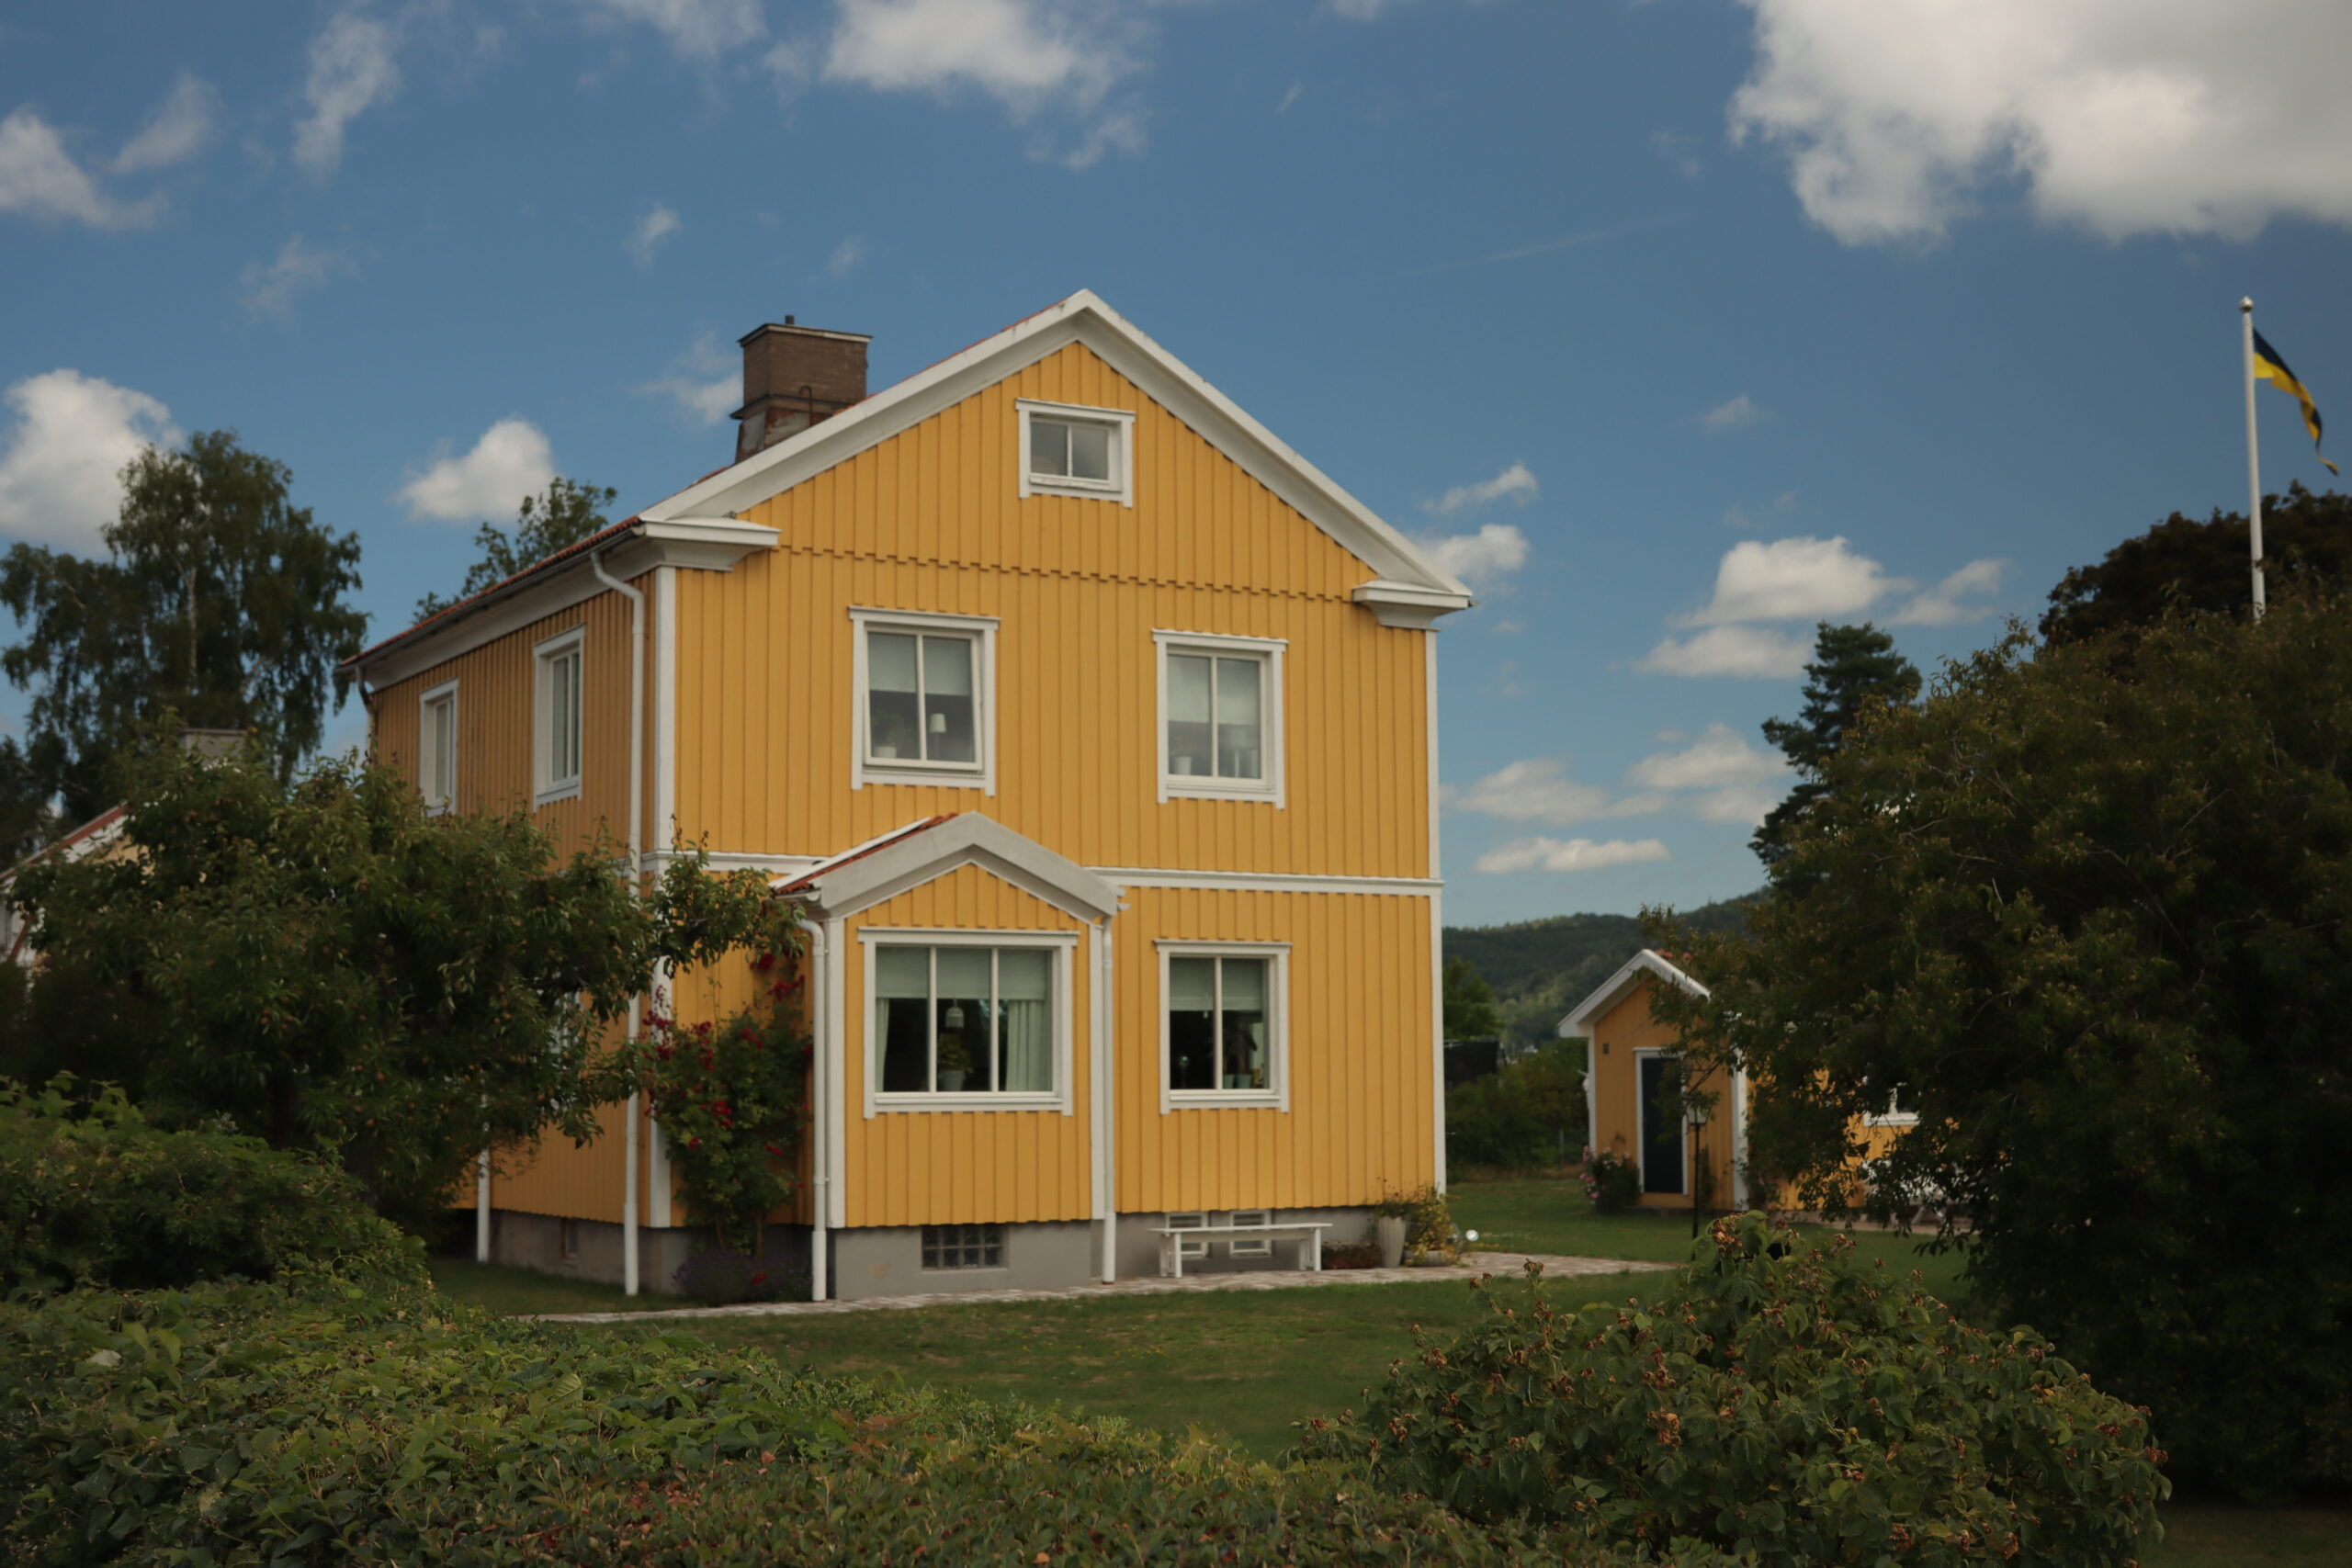 Byg i skandinavisk stil: Sådan gør du